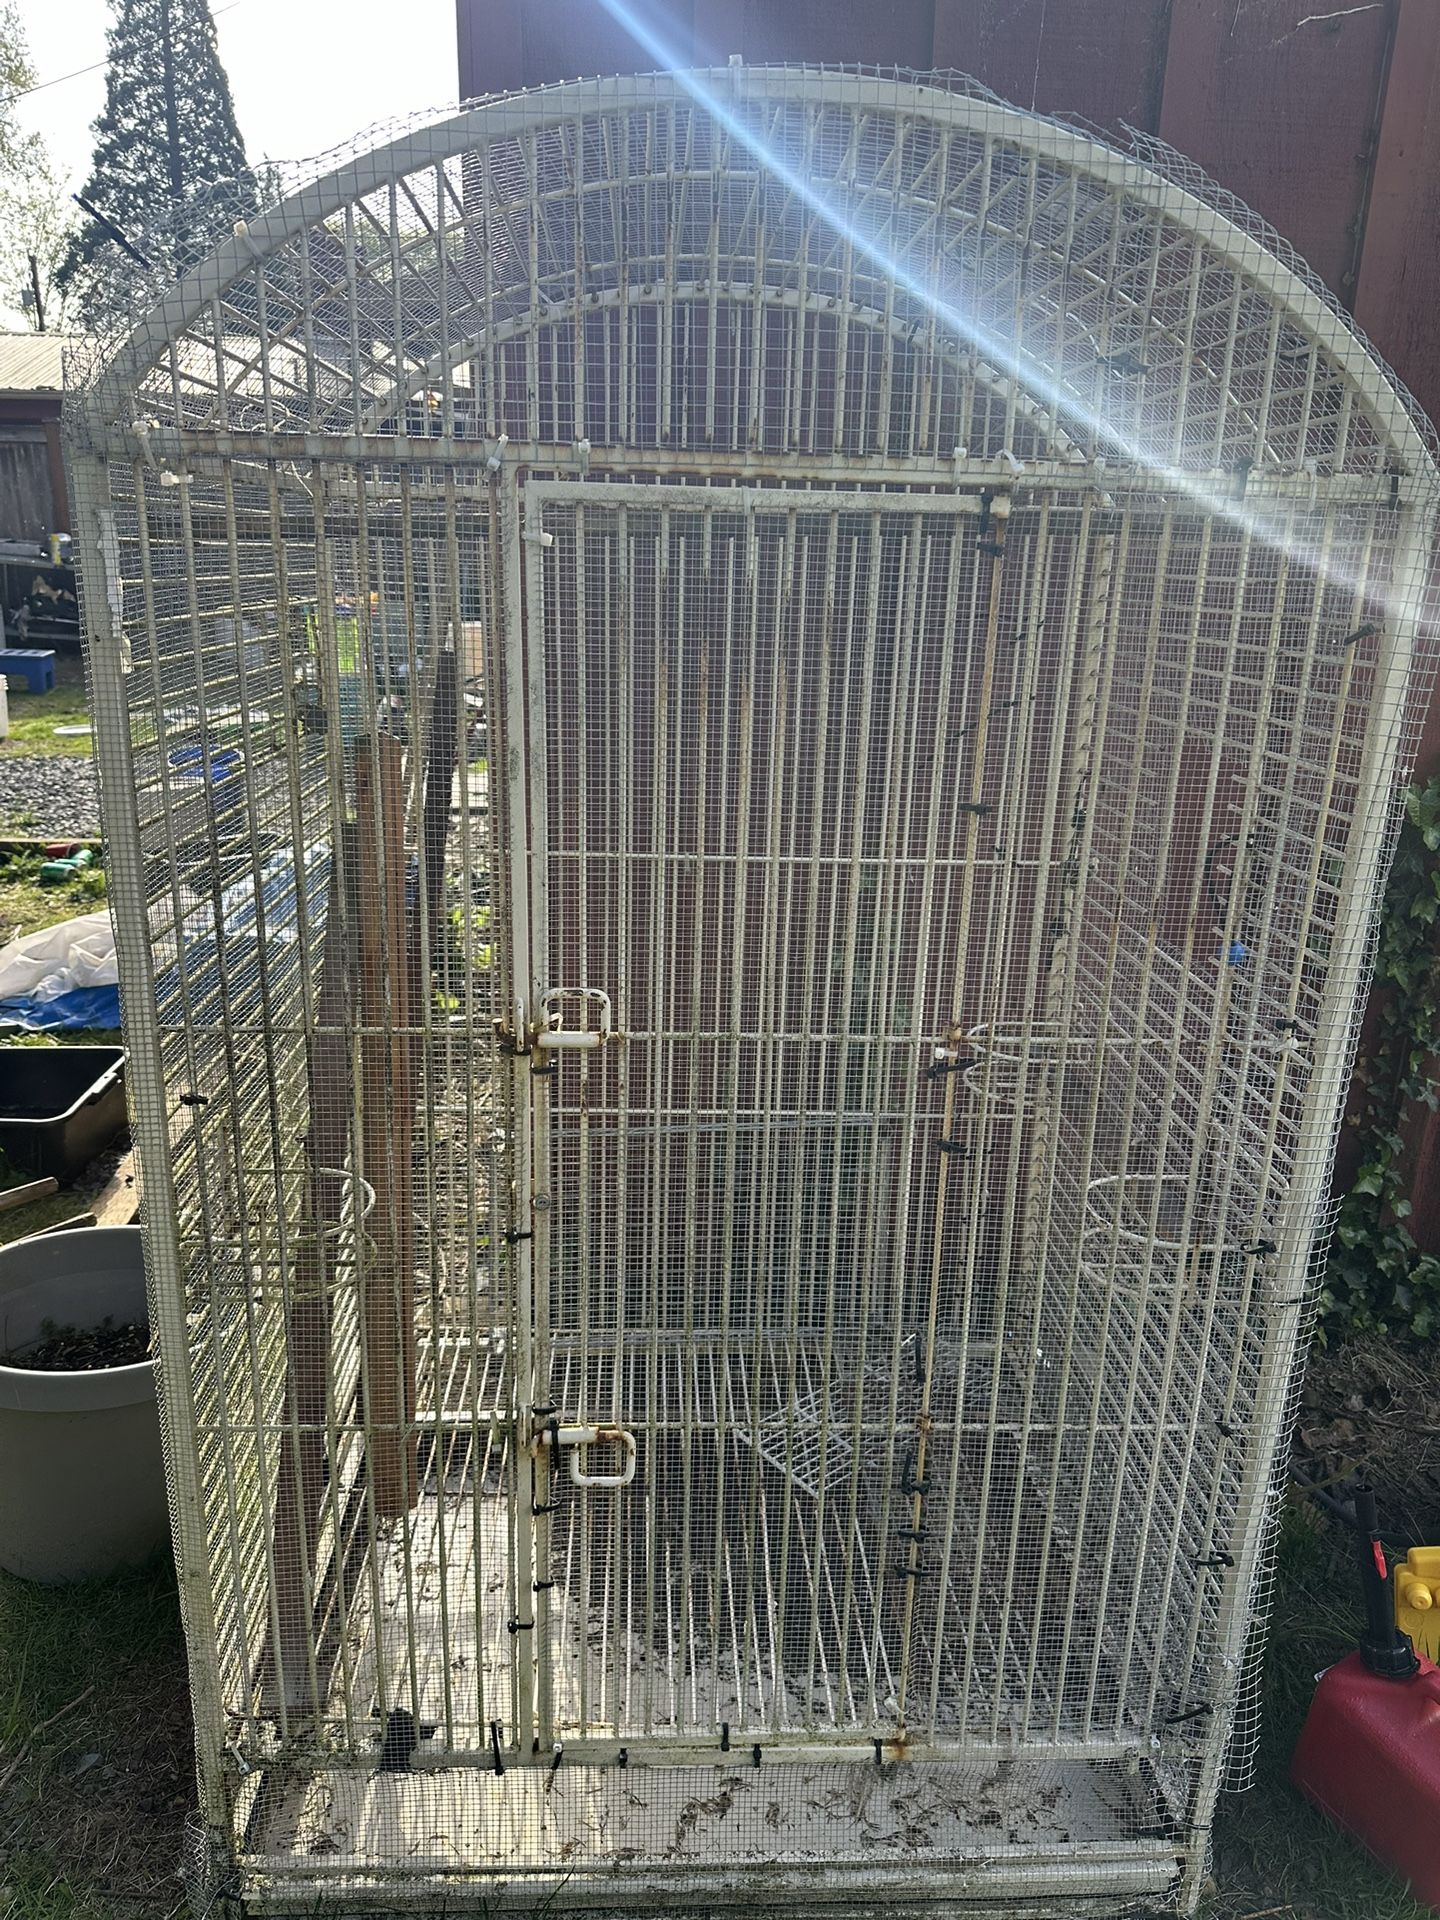 Huge Bird Cage  Free 